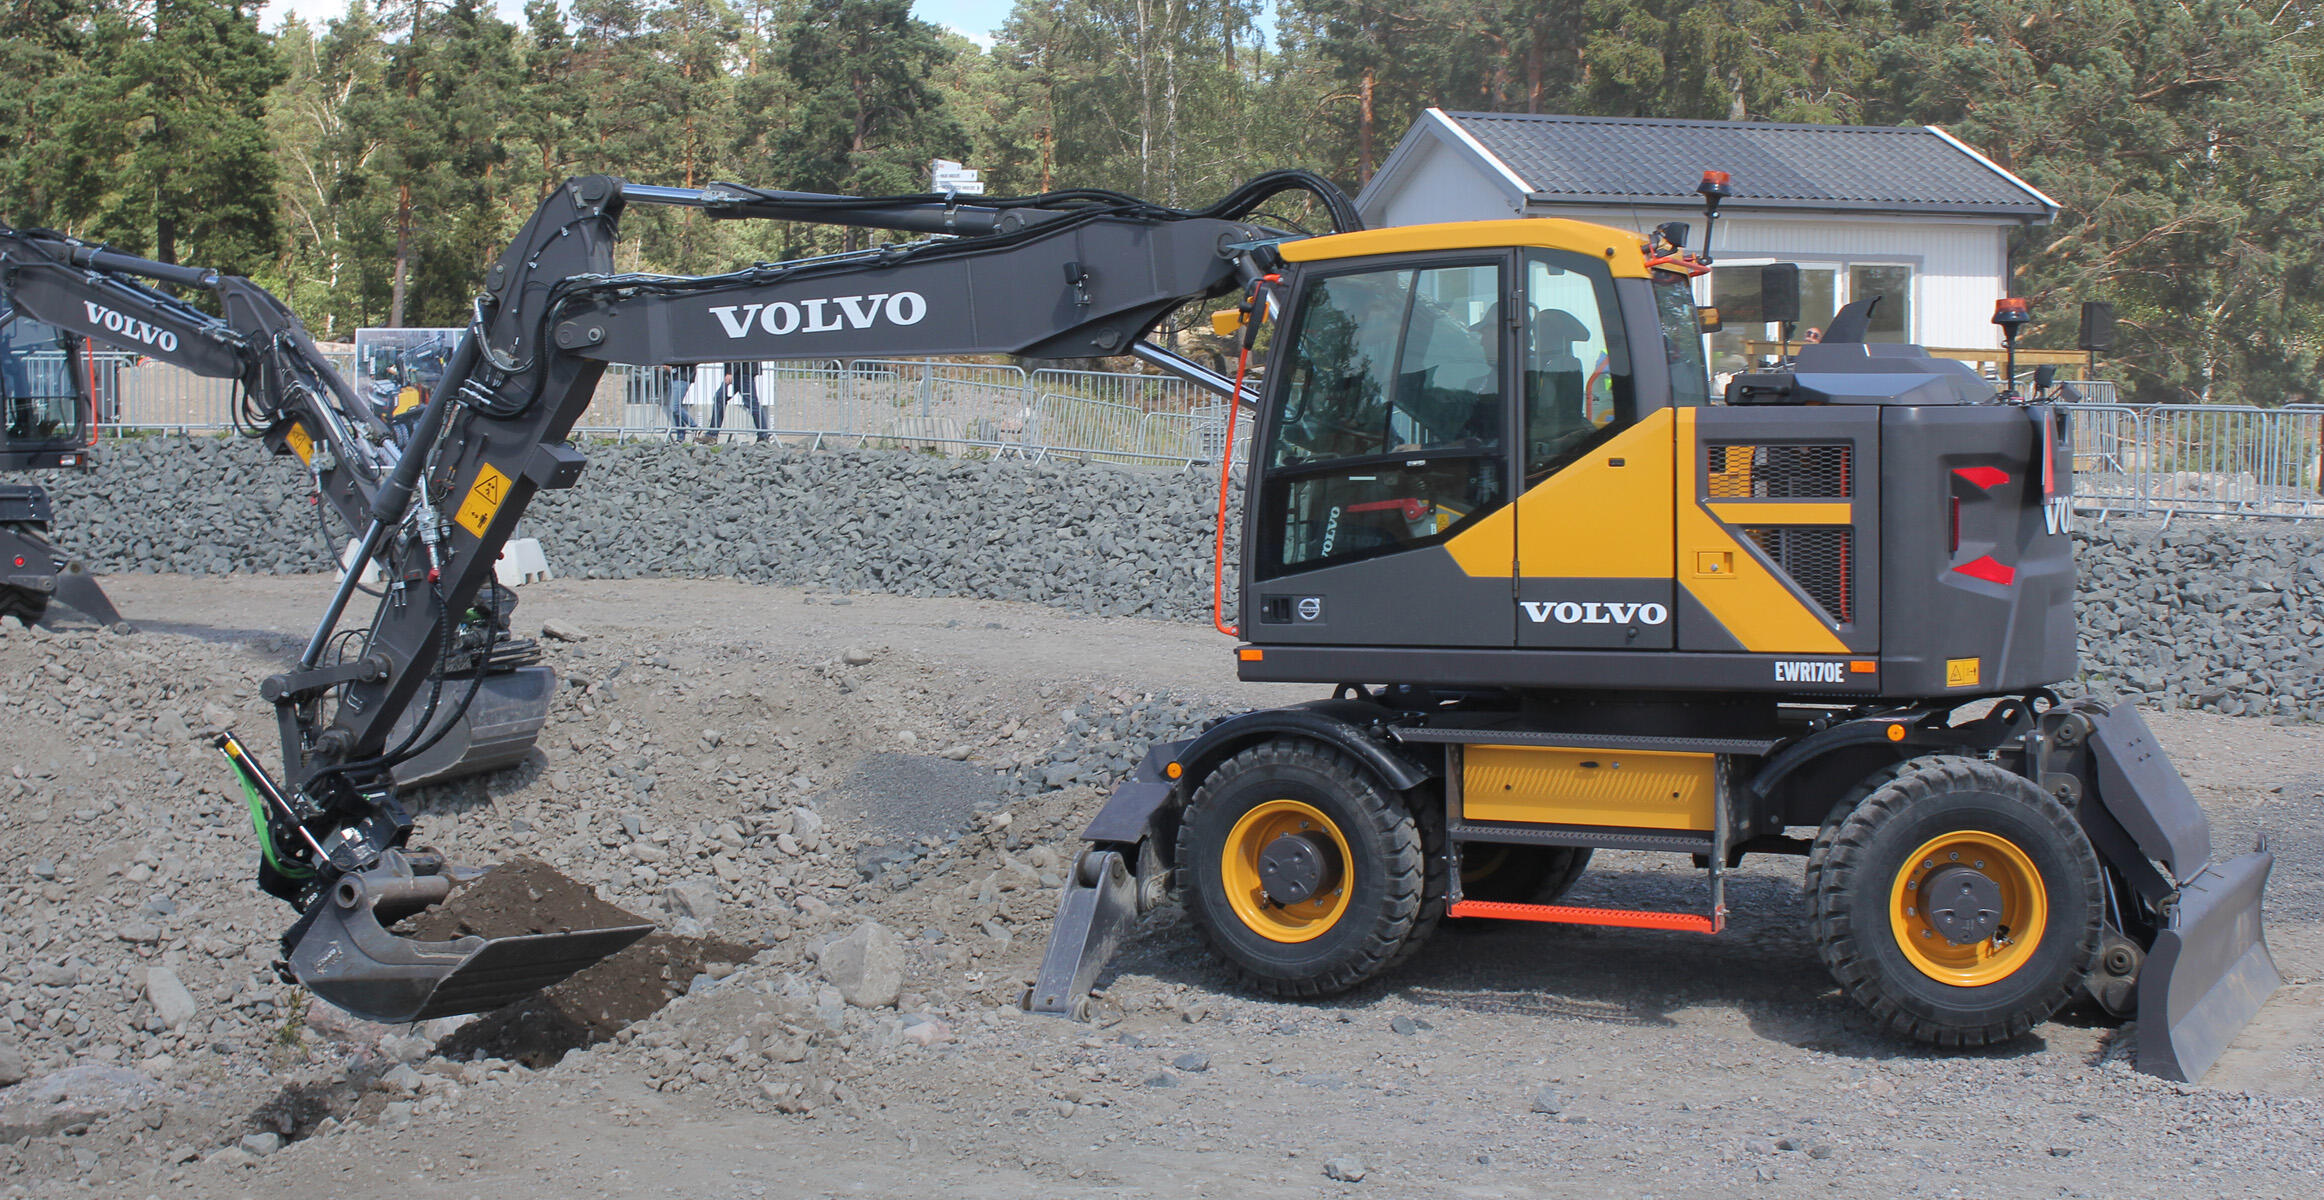 Volvo EW170E short swing radius wheeled excavator at the Volvo Customer Center in Eskilstuna, Sweden